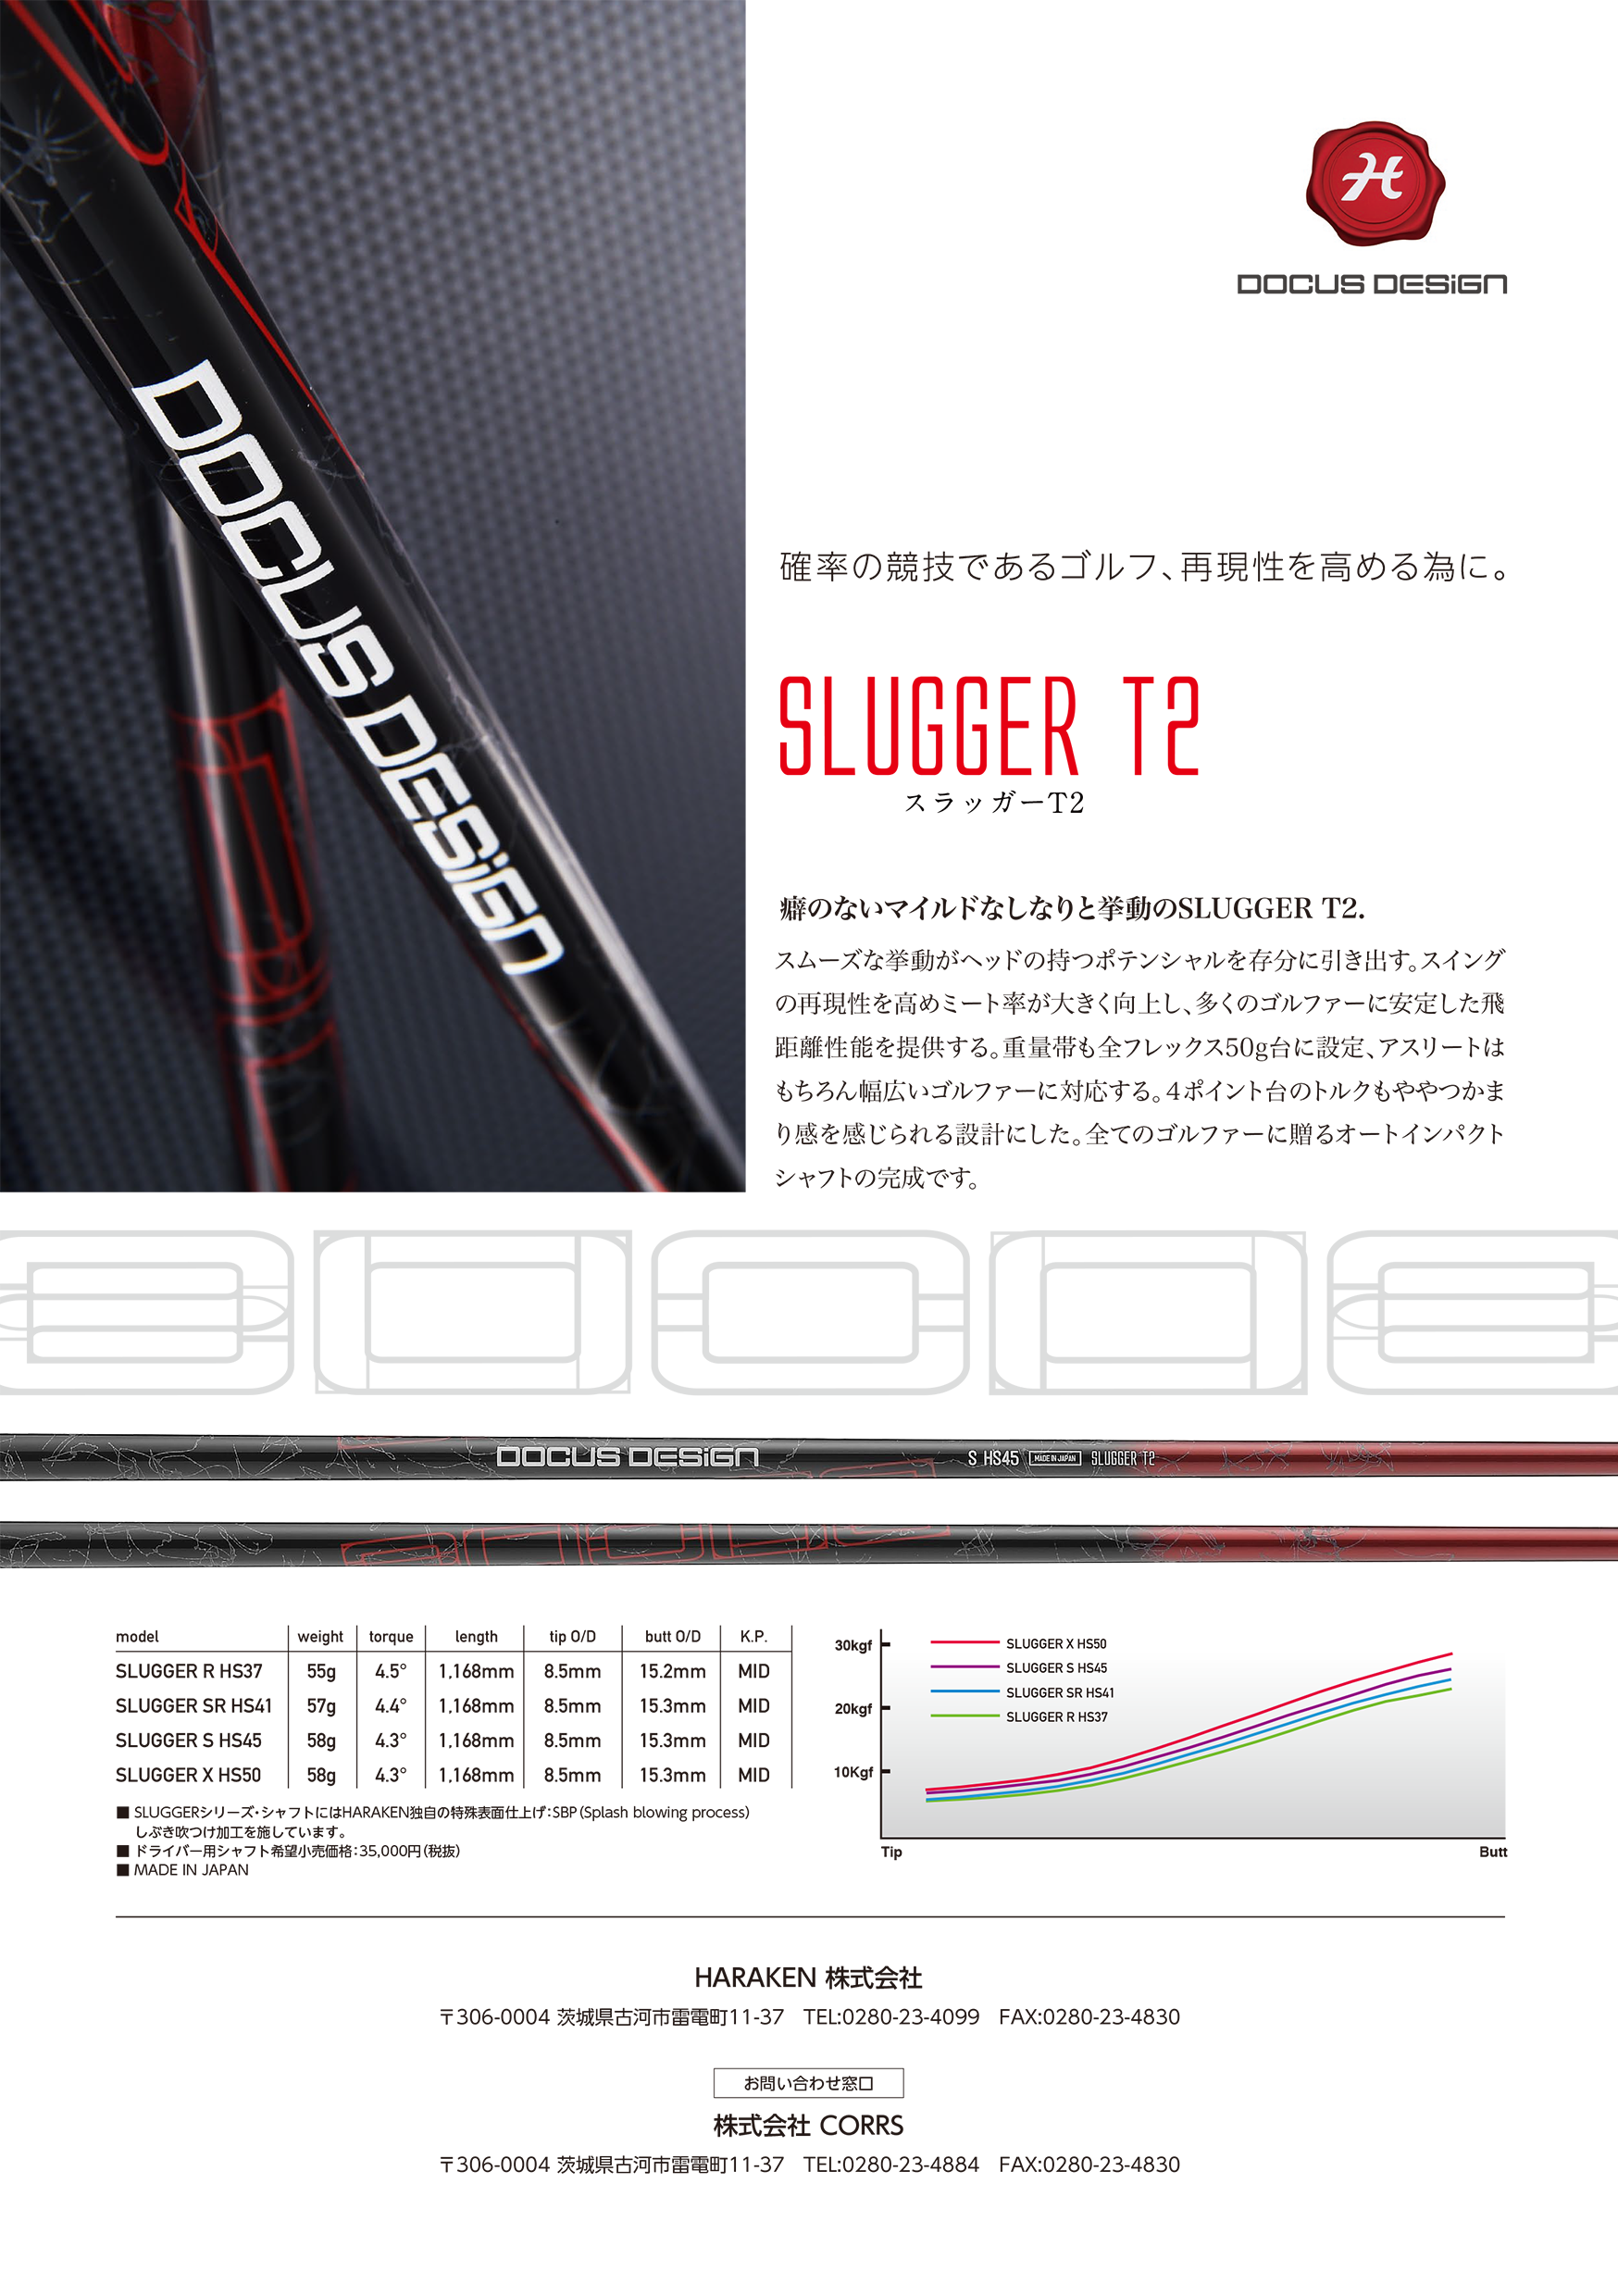 SLUGGER T2 | Haraken DOCUS GOLF CLUB Official Site